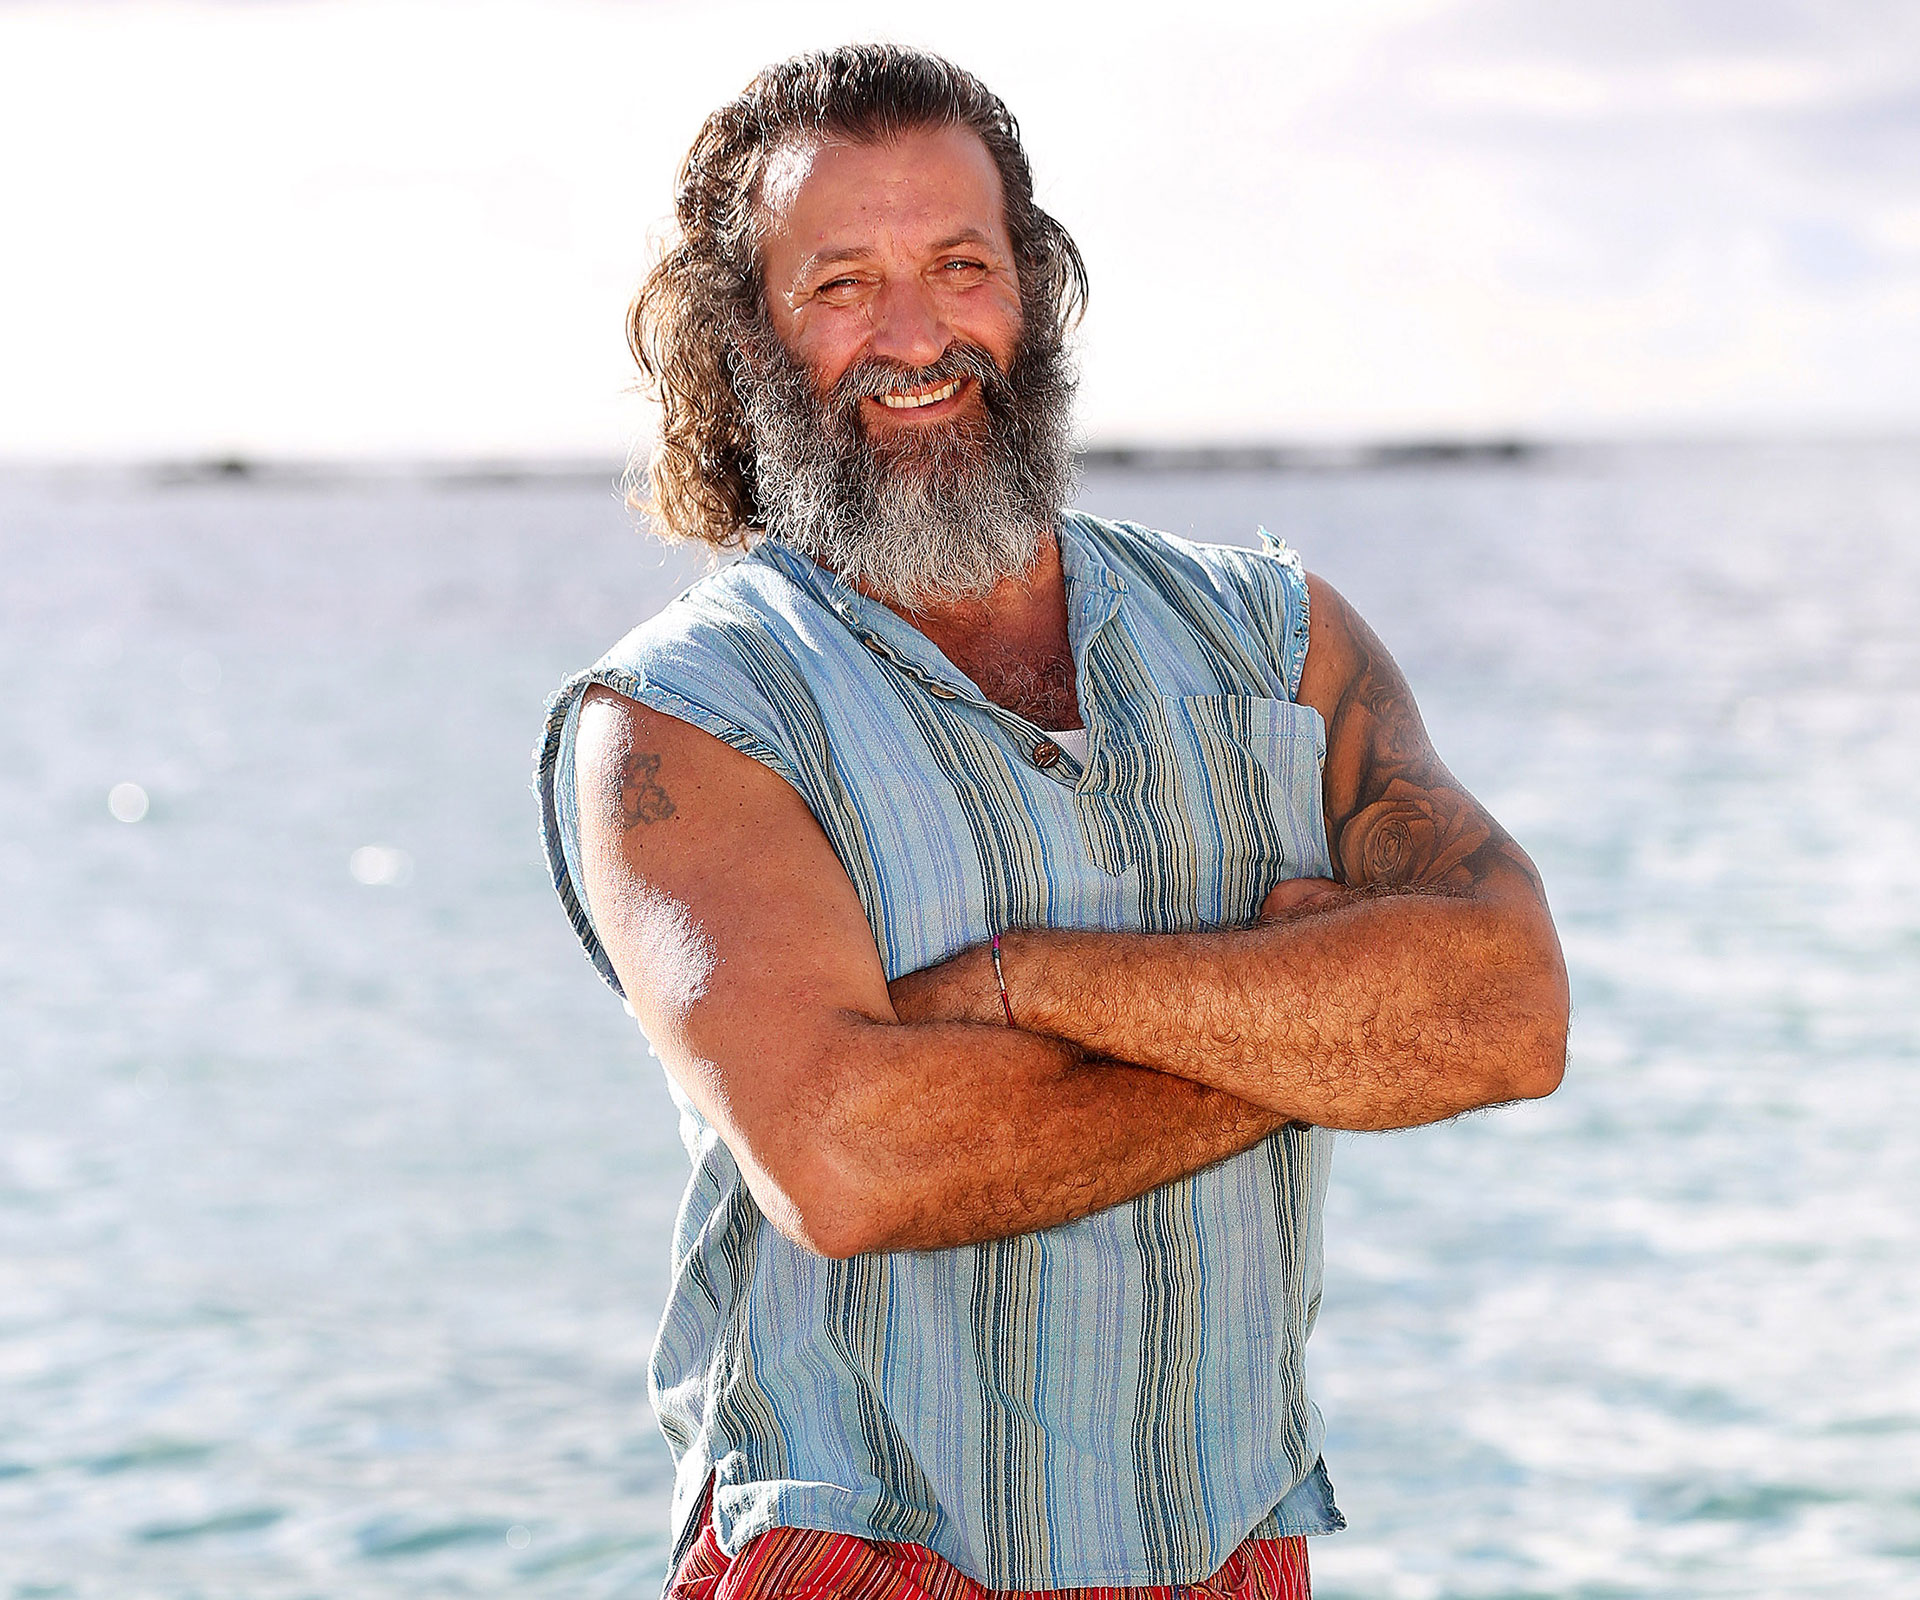 Australian Survivor contestant Mark